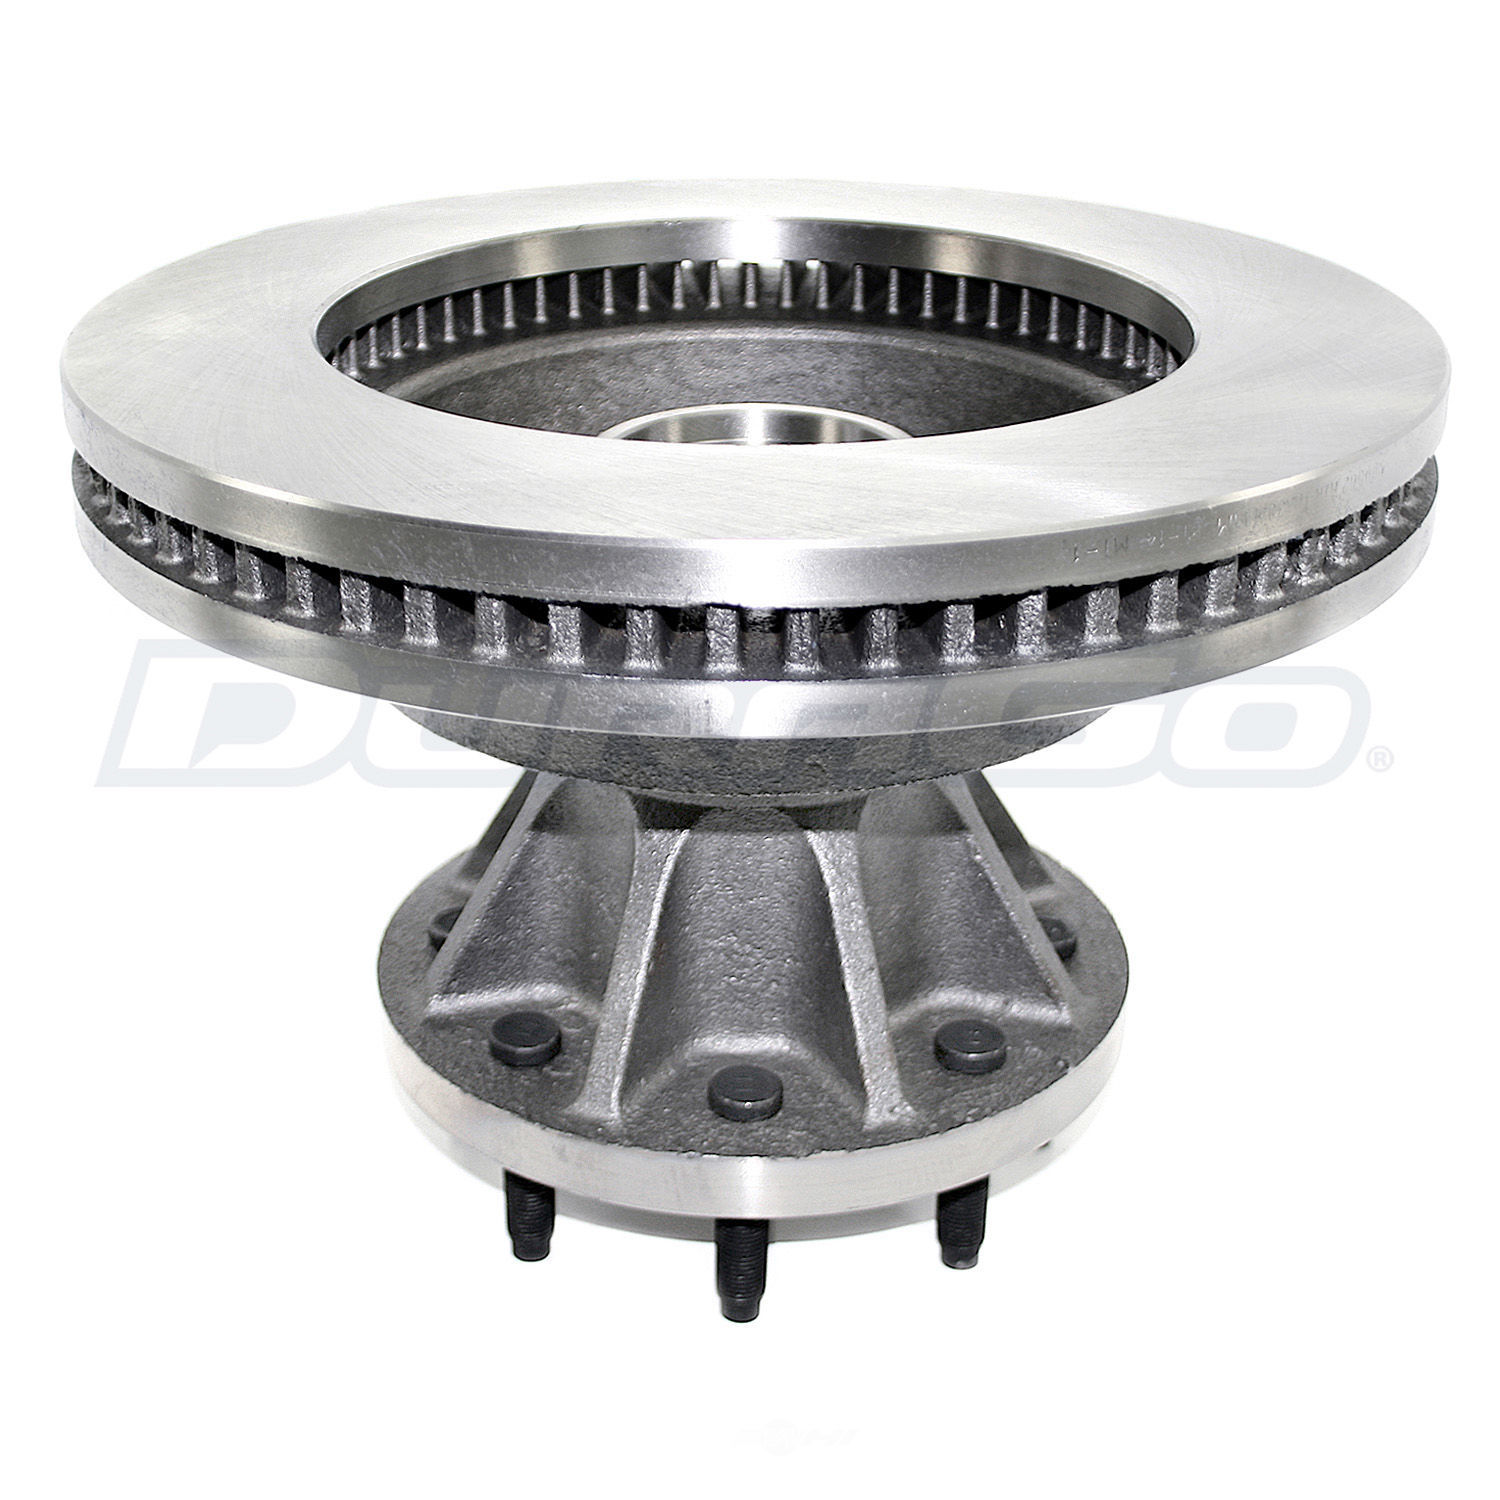 DURAGO - Disc Brake Rotor & Hub Assembly - D48 BR900582